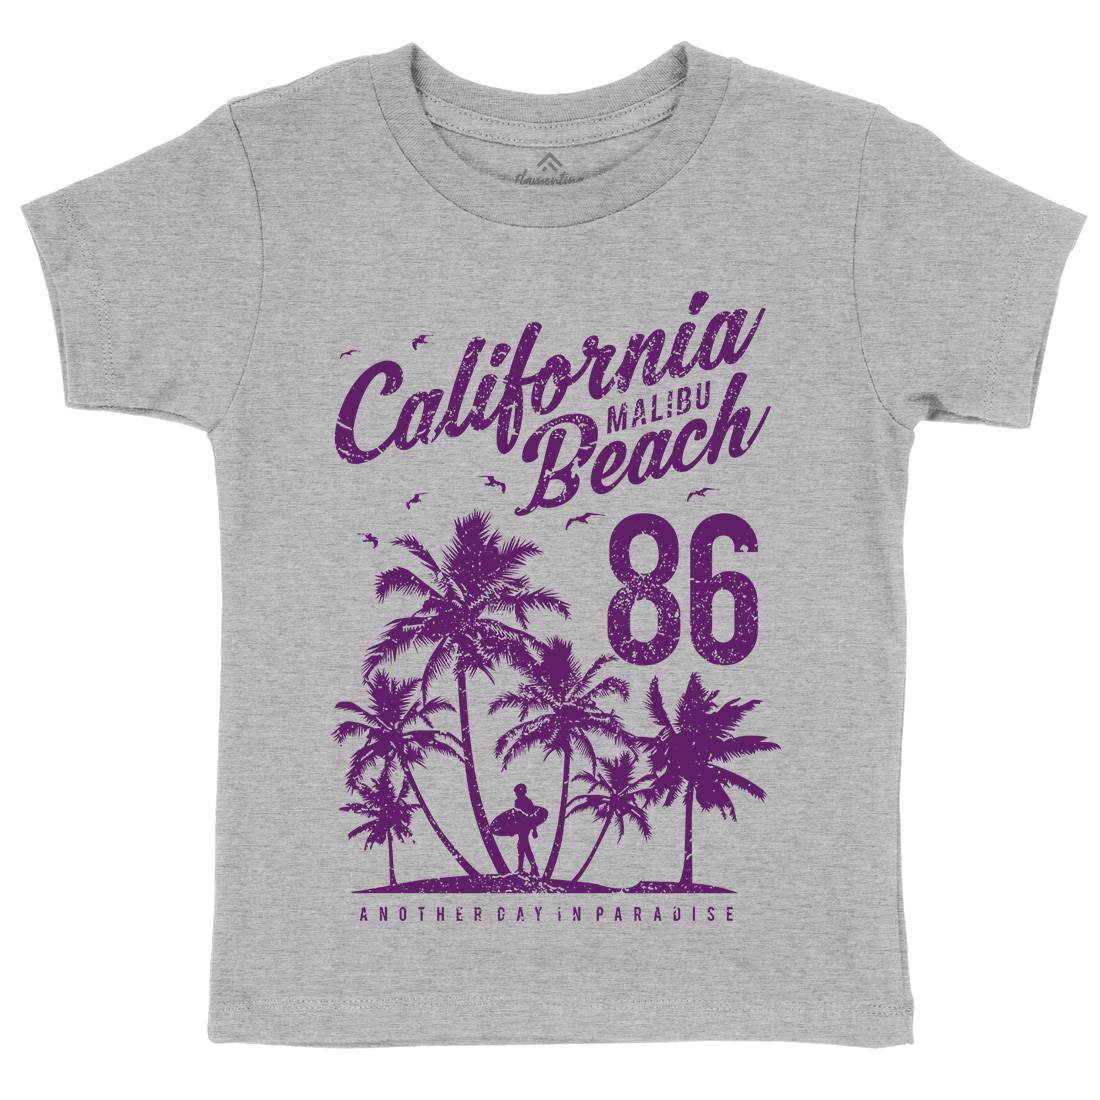 California Malibu Beach Kids Organic Crew Neck T-Shirt Surf A630